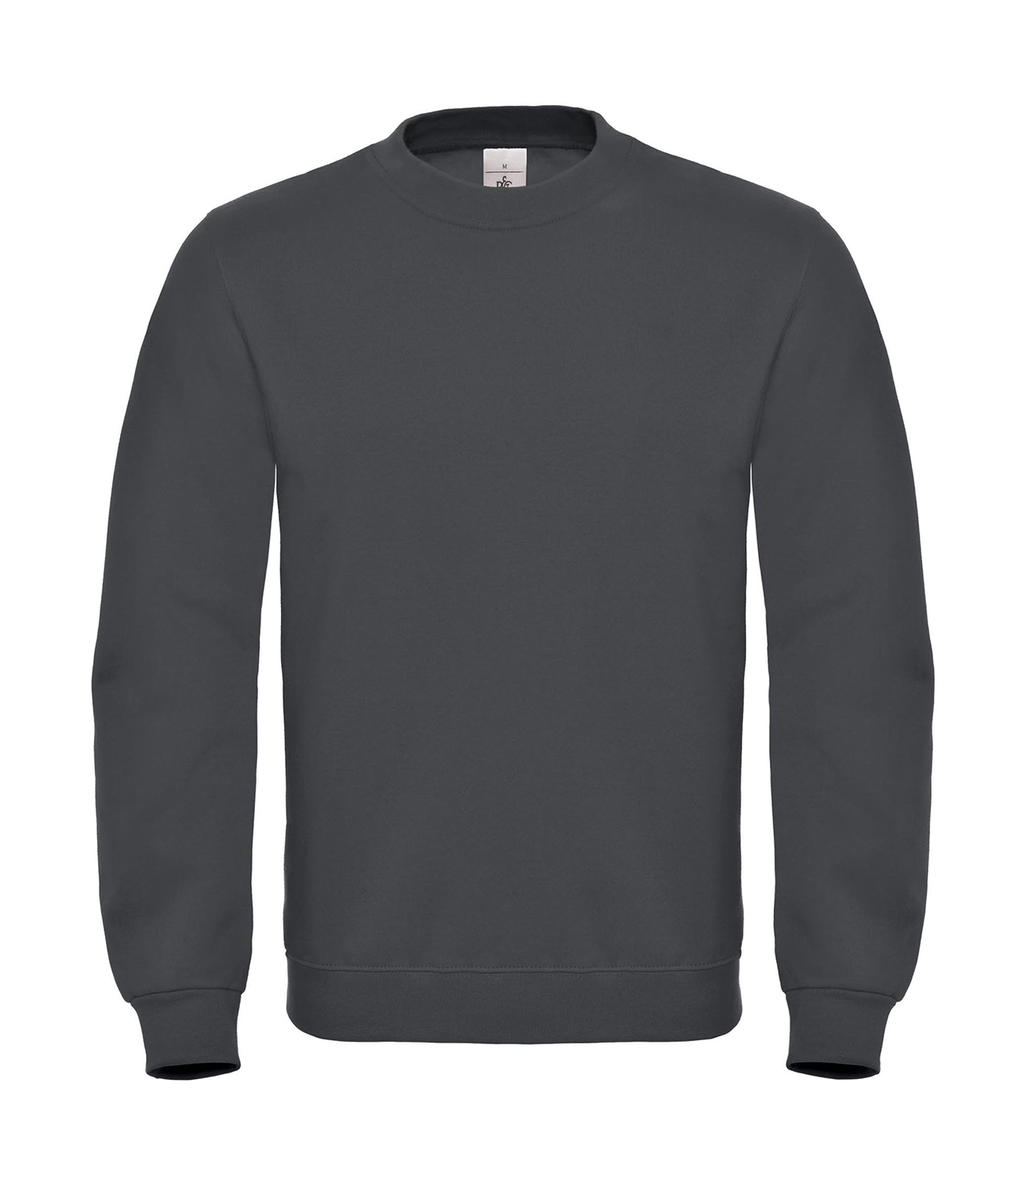  ID.002 Cotton Rich Sweatshirt  in Farbe Anthracite